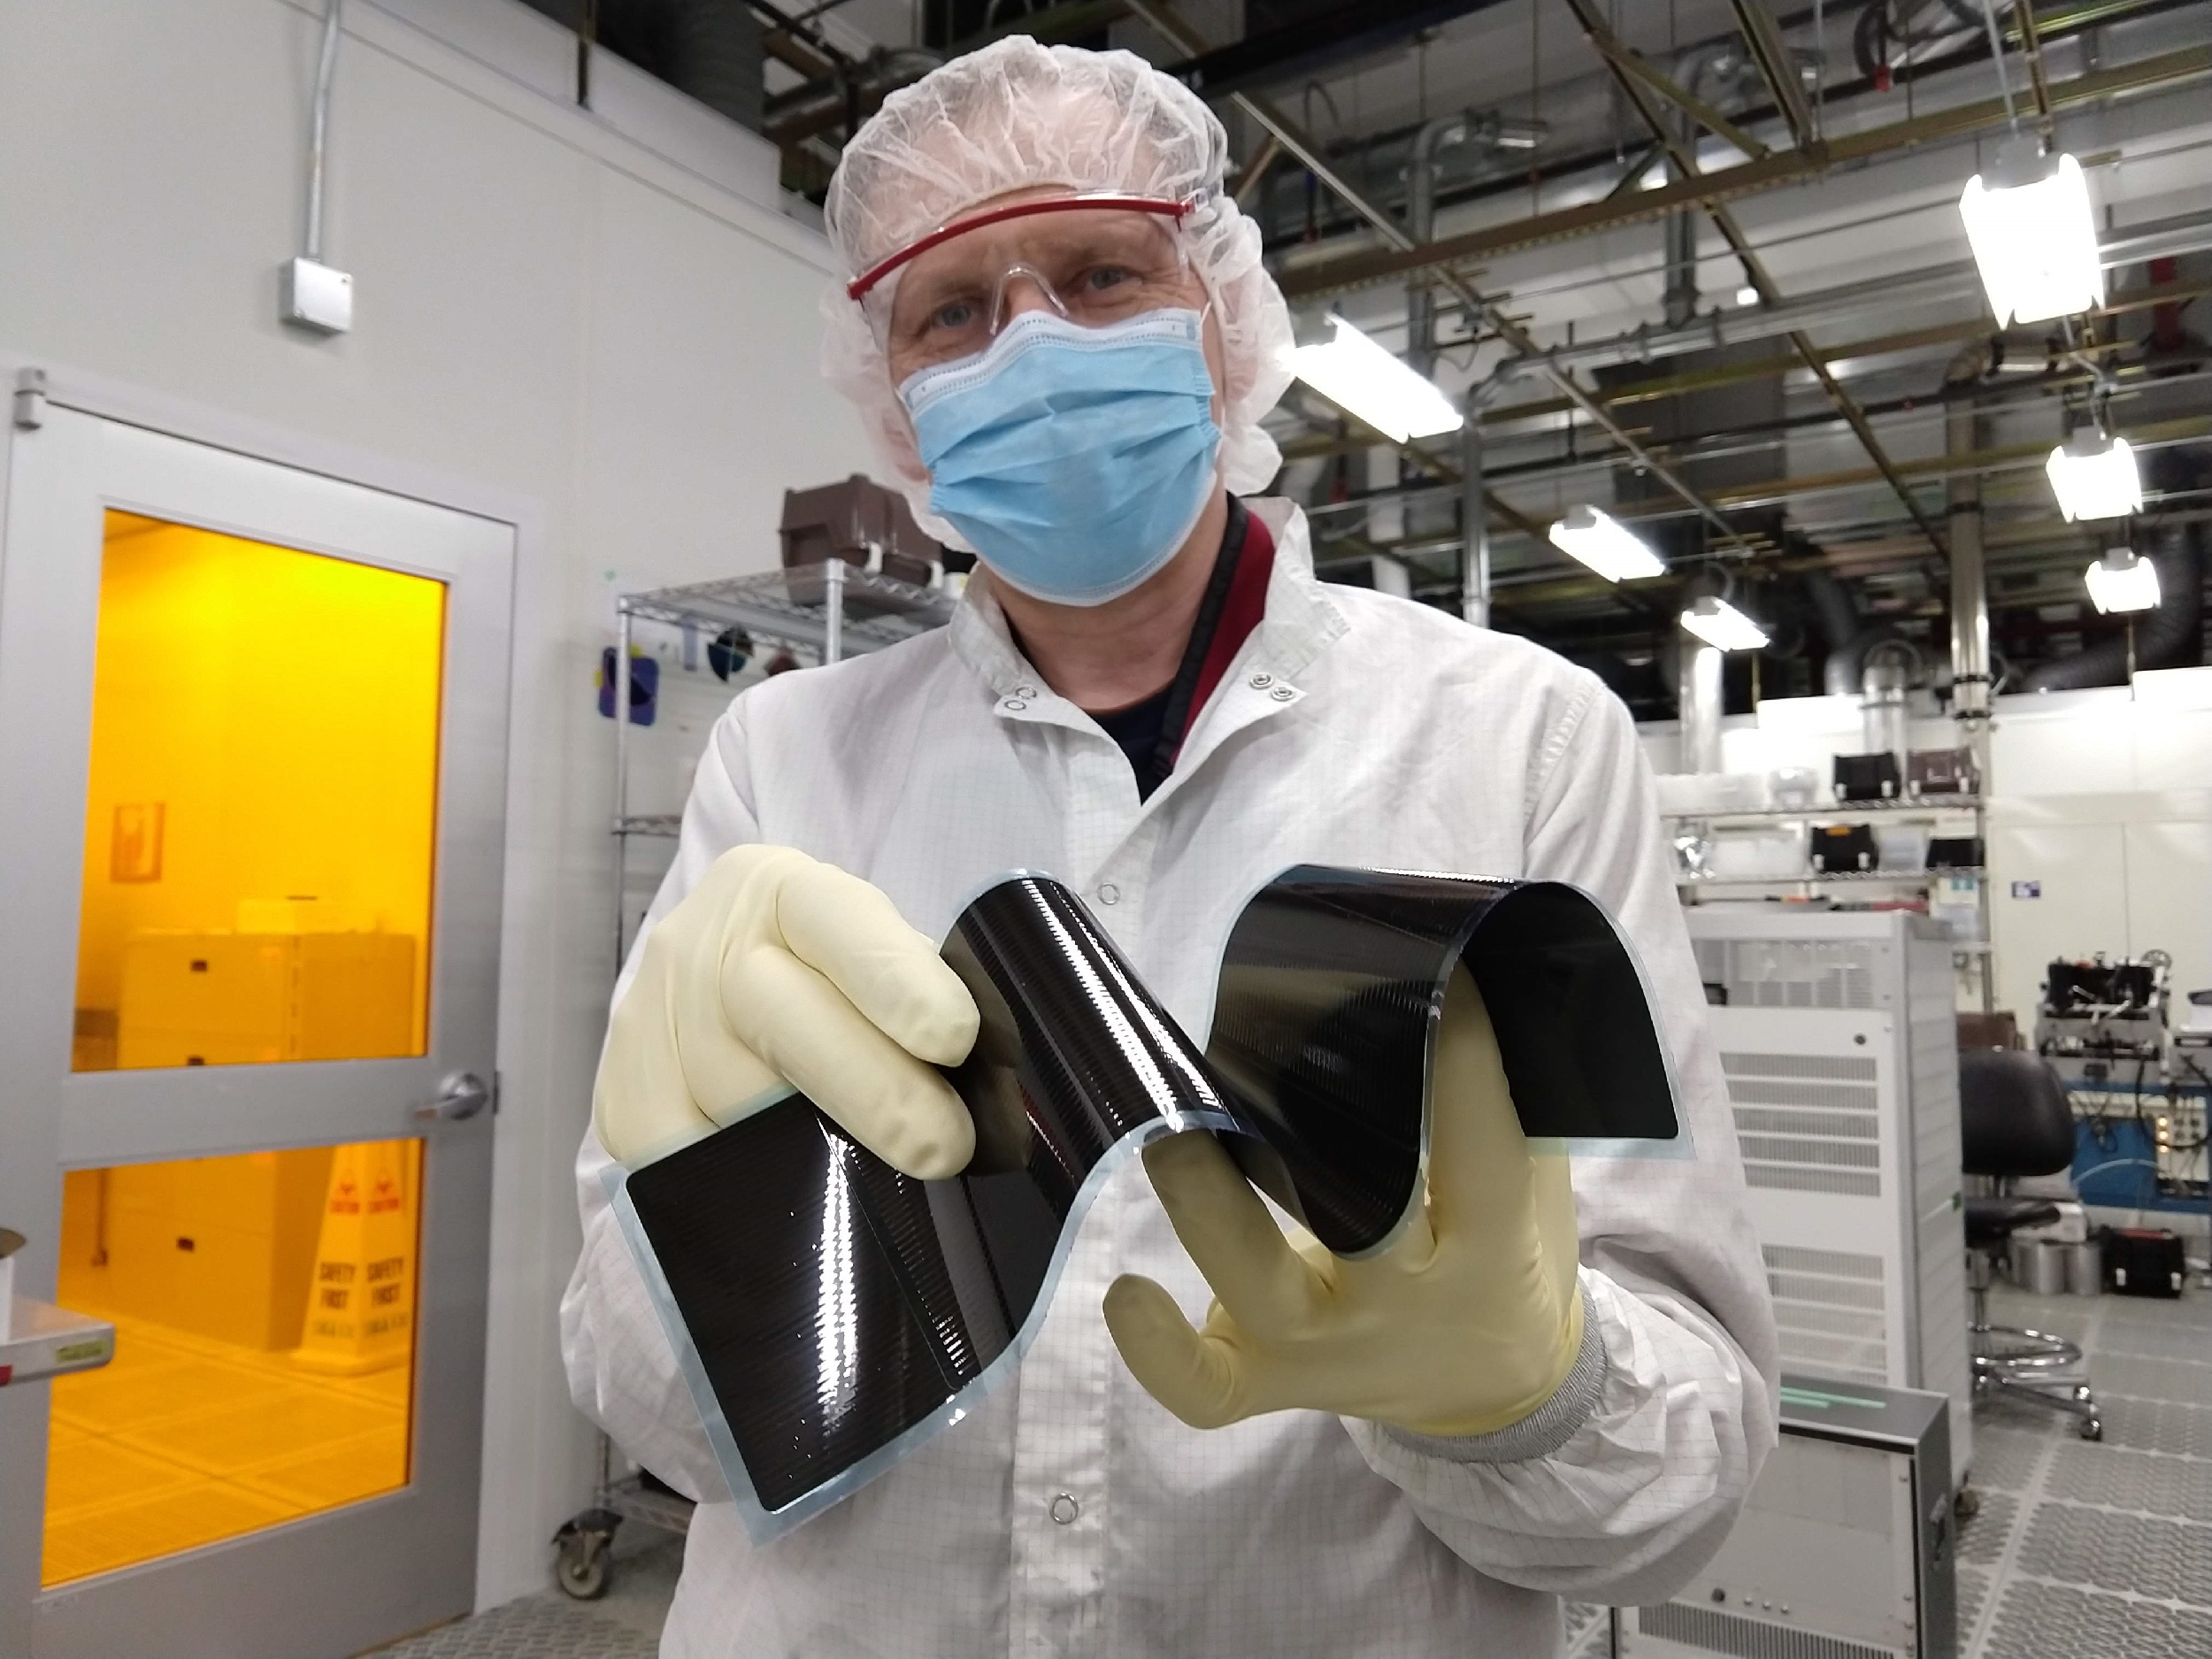 The laboratory technician demonstrates the flexibility of the regimen "Sun blankets."